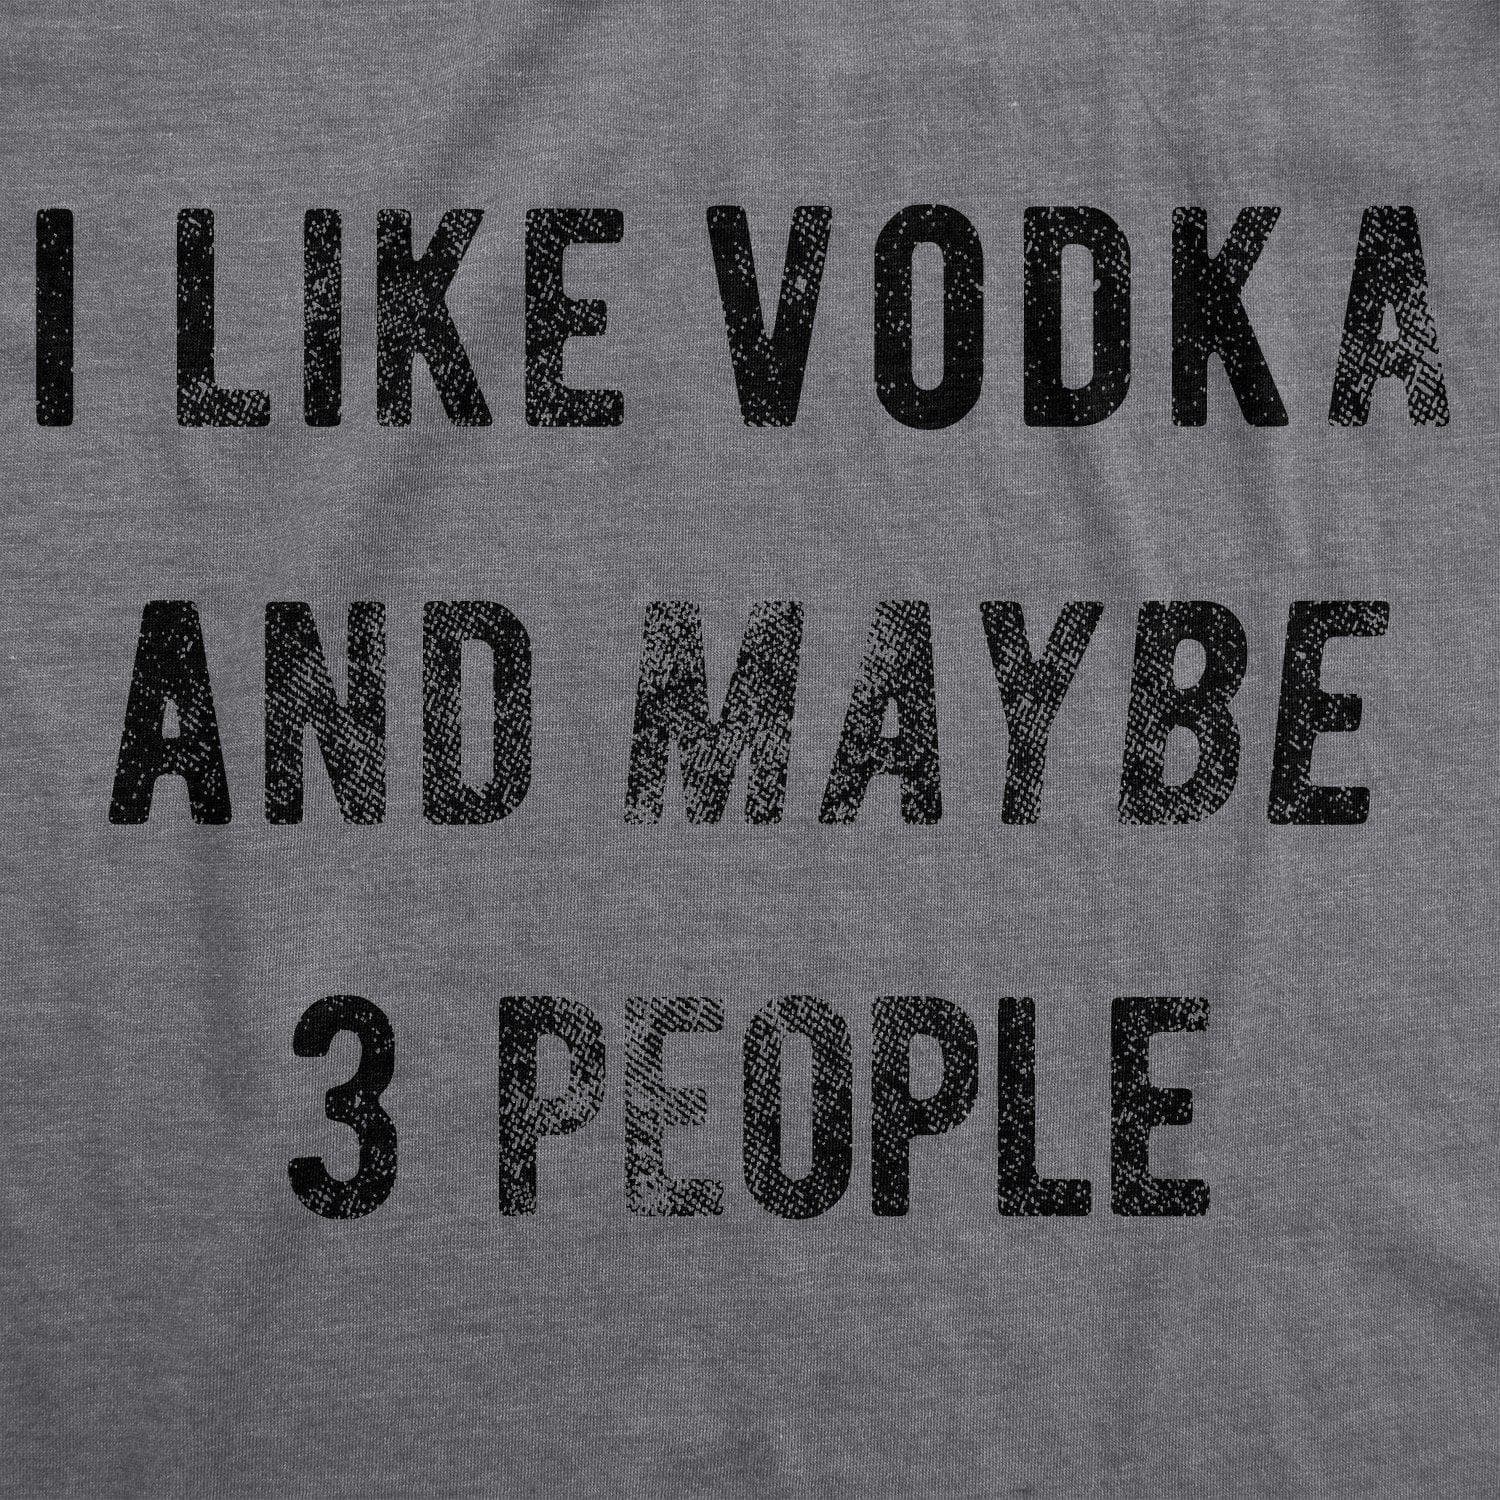 I Like Vodka And Maybe 3 People Women's Tshirt - Crazy Dog T-Shirts